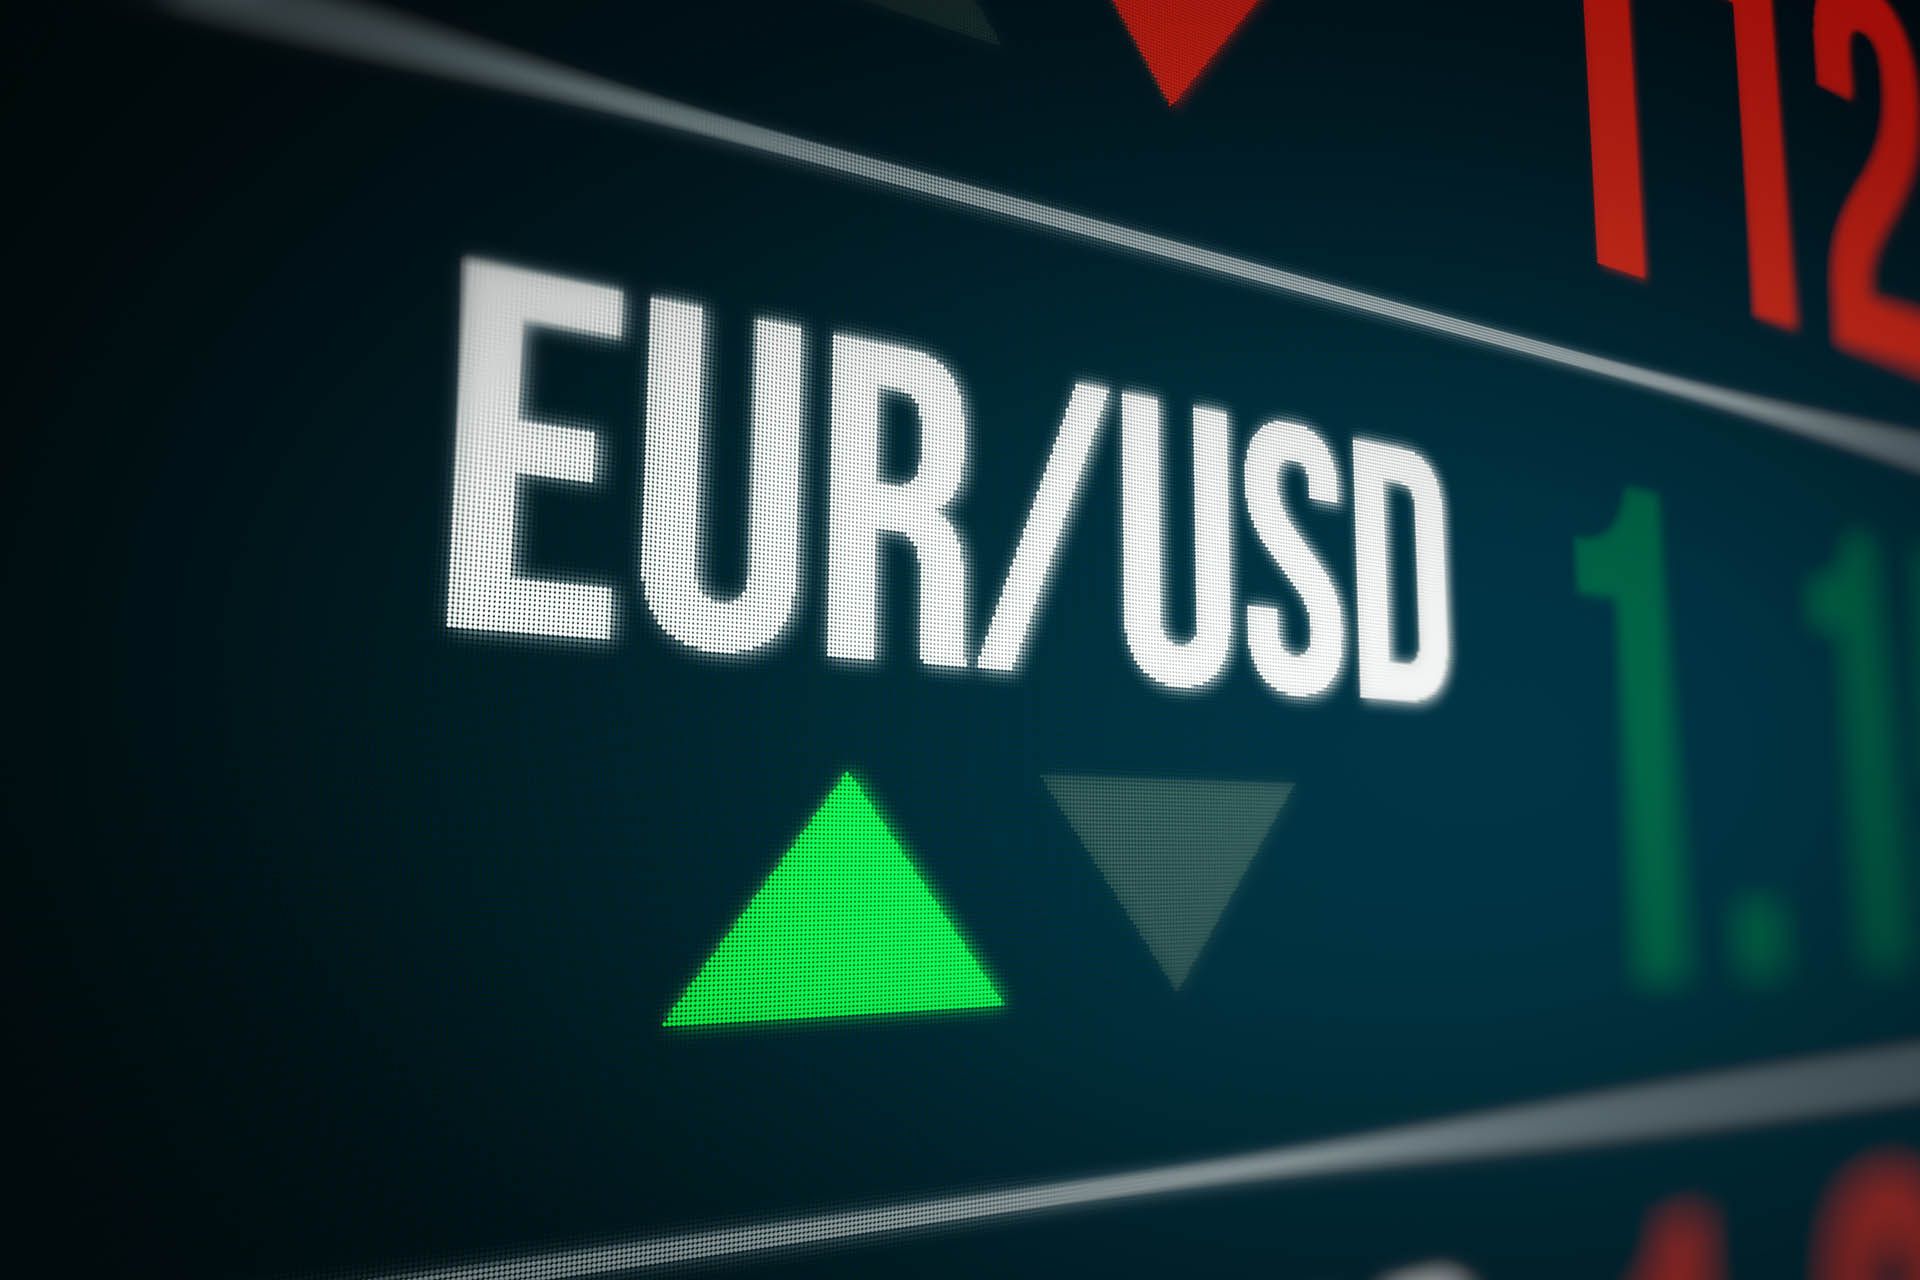 EUR to USD forecast